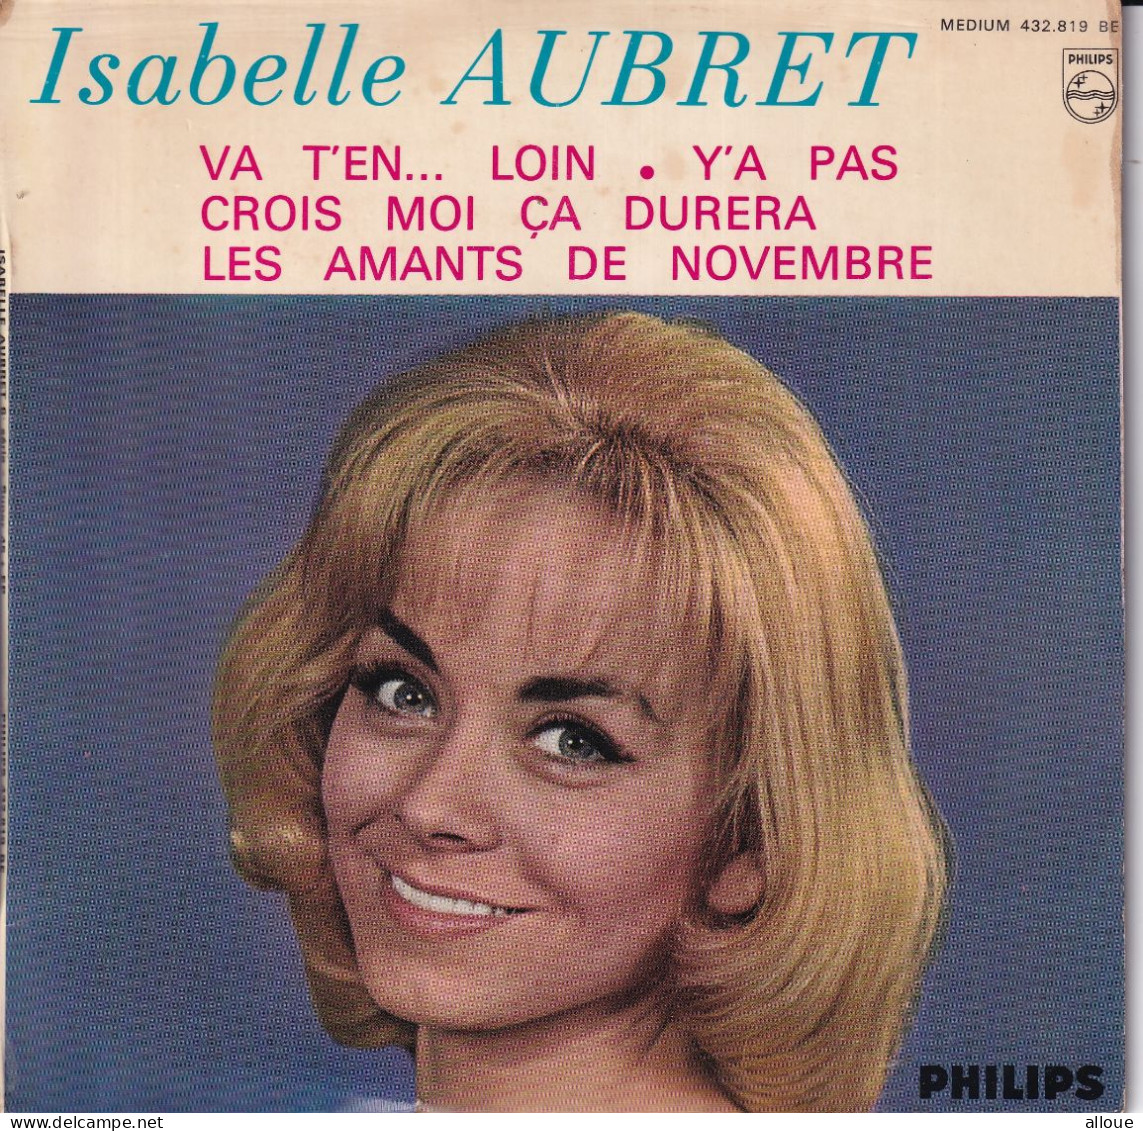 ISABELLE AUBRET - FR EP - VA T'EN... LOIN + 3 - Altri - Francese